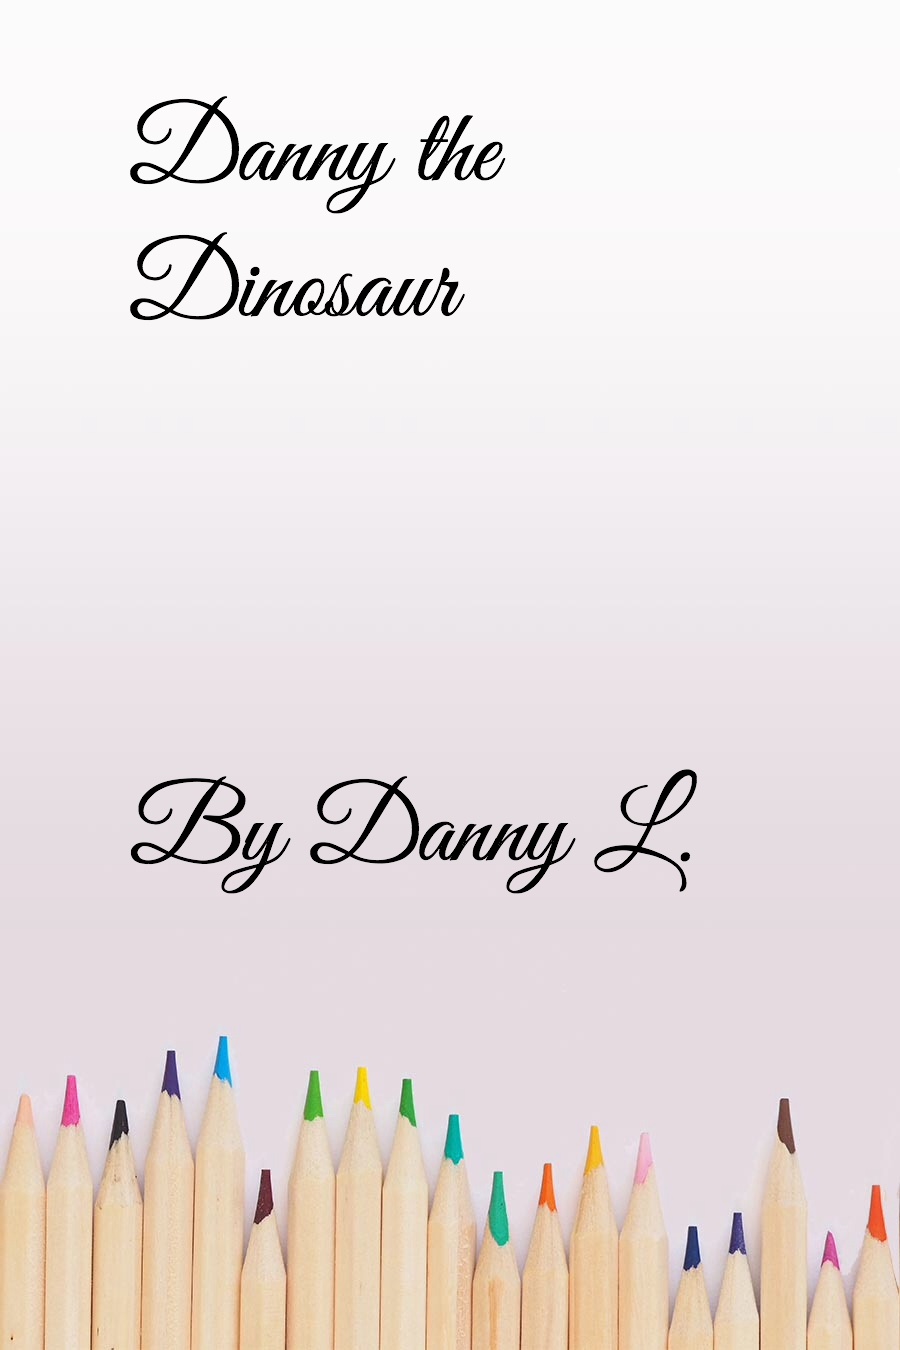 Danny the Dinosaur by Daniel L